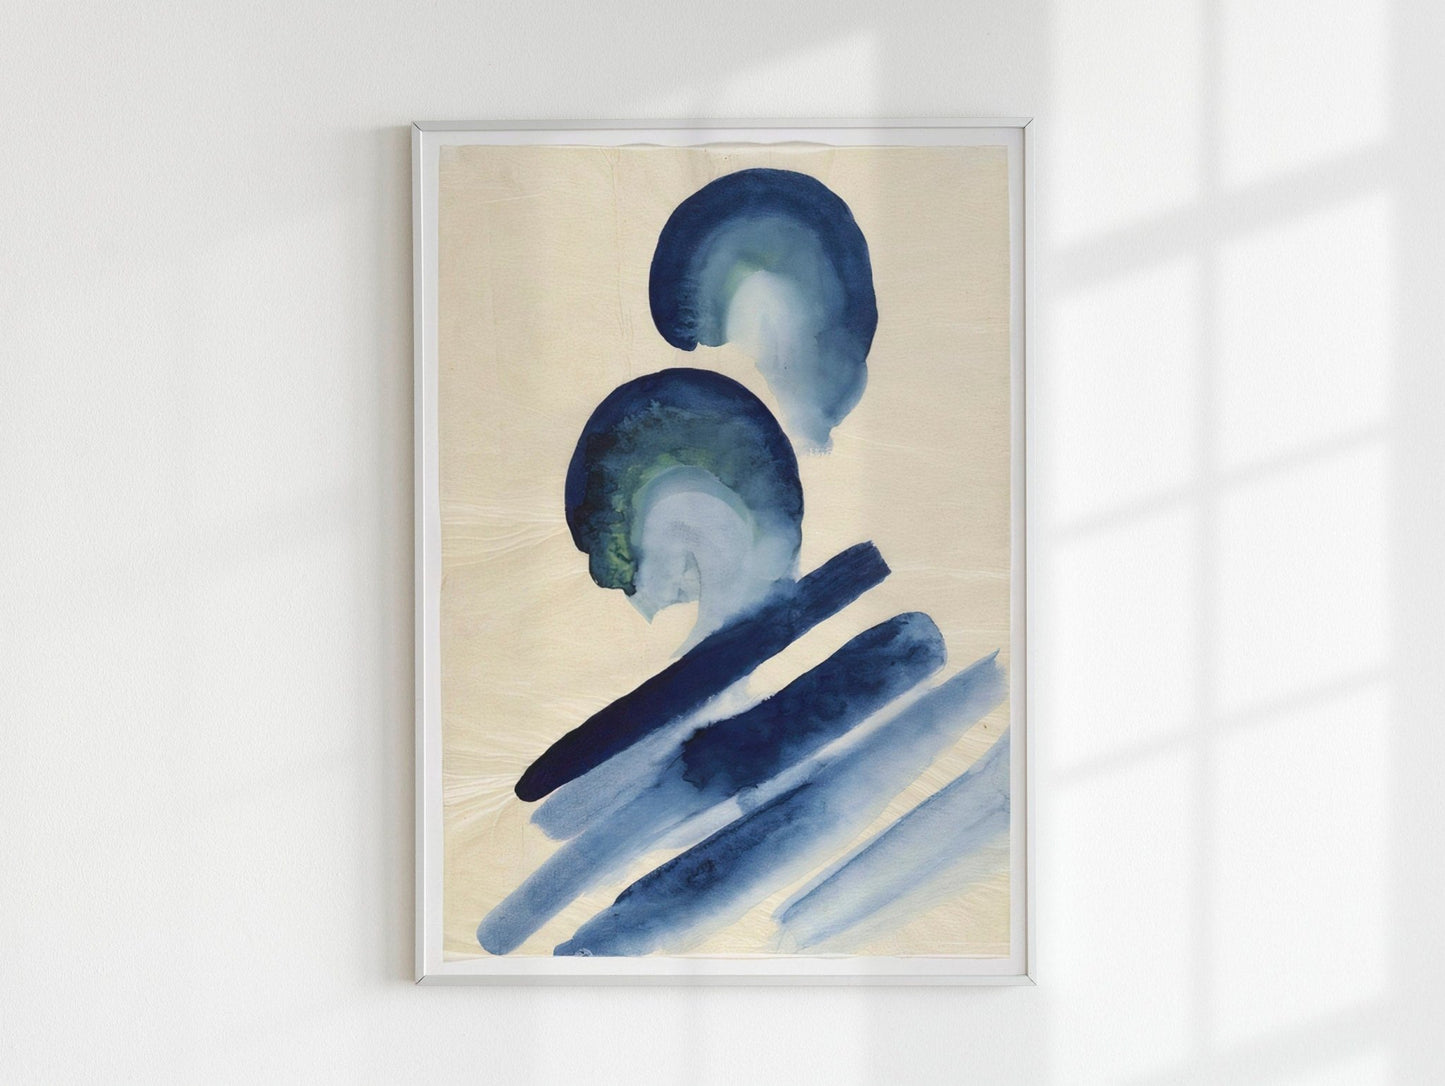 GEORGIA O'KEEFFE - Blue No. 2 - Pathos Studio - Posters, Prints, & Visual Artwork